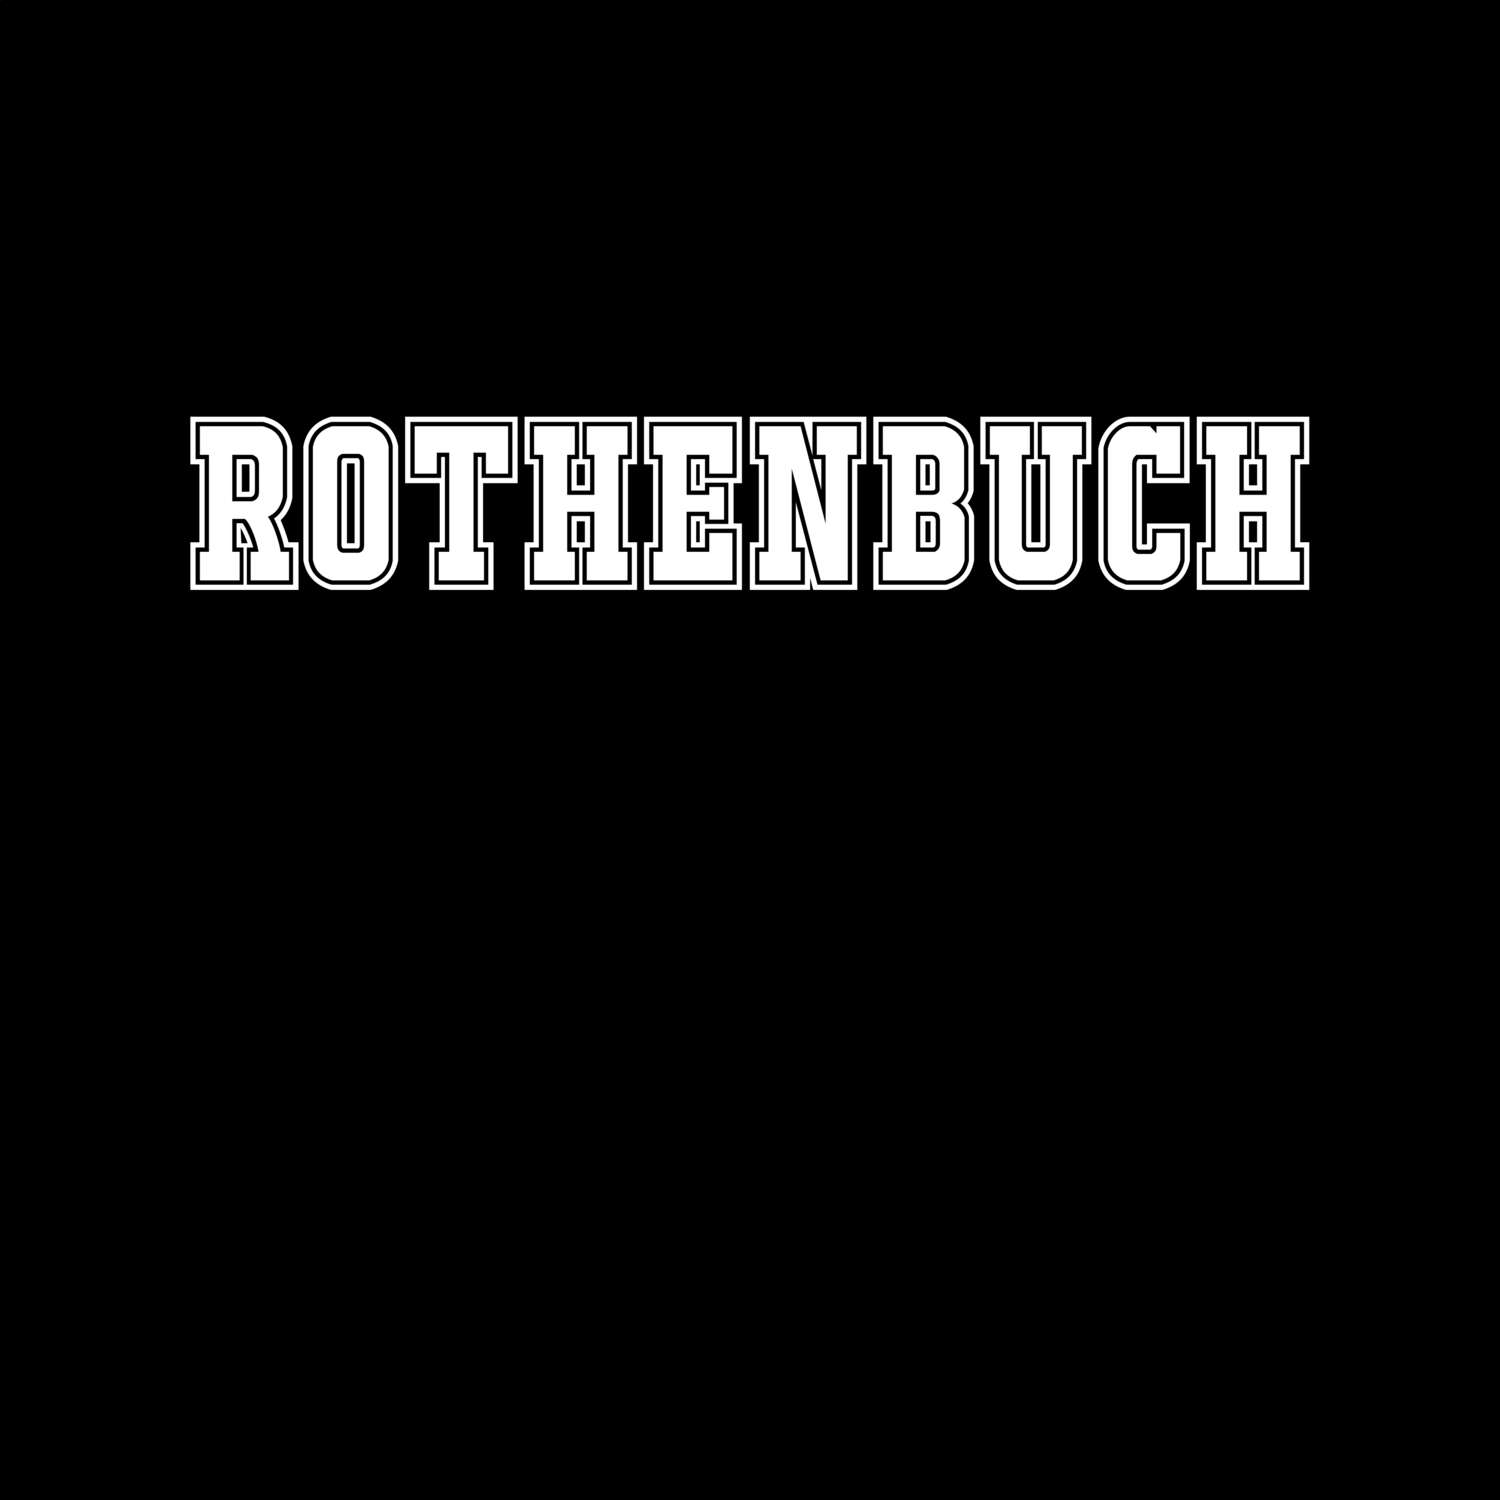 Rothenbuch T-Shirt »Classic«